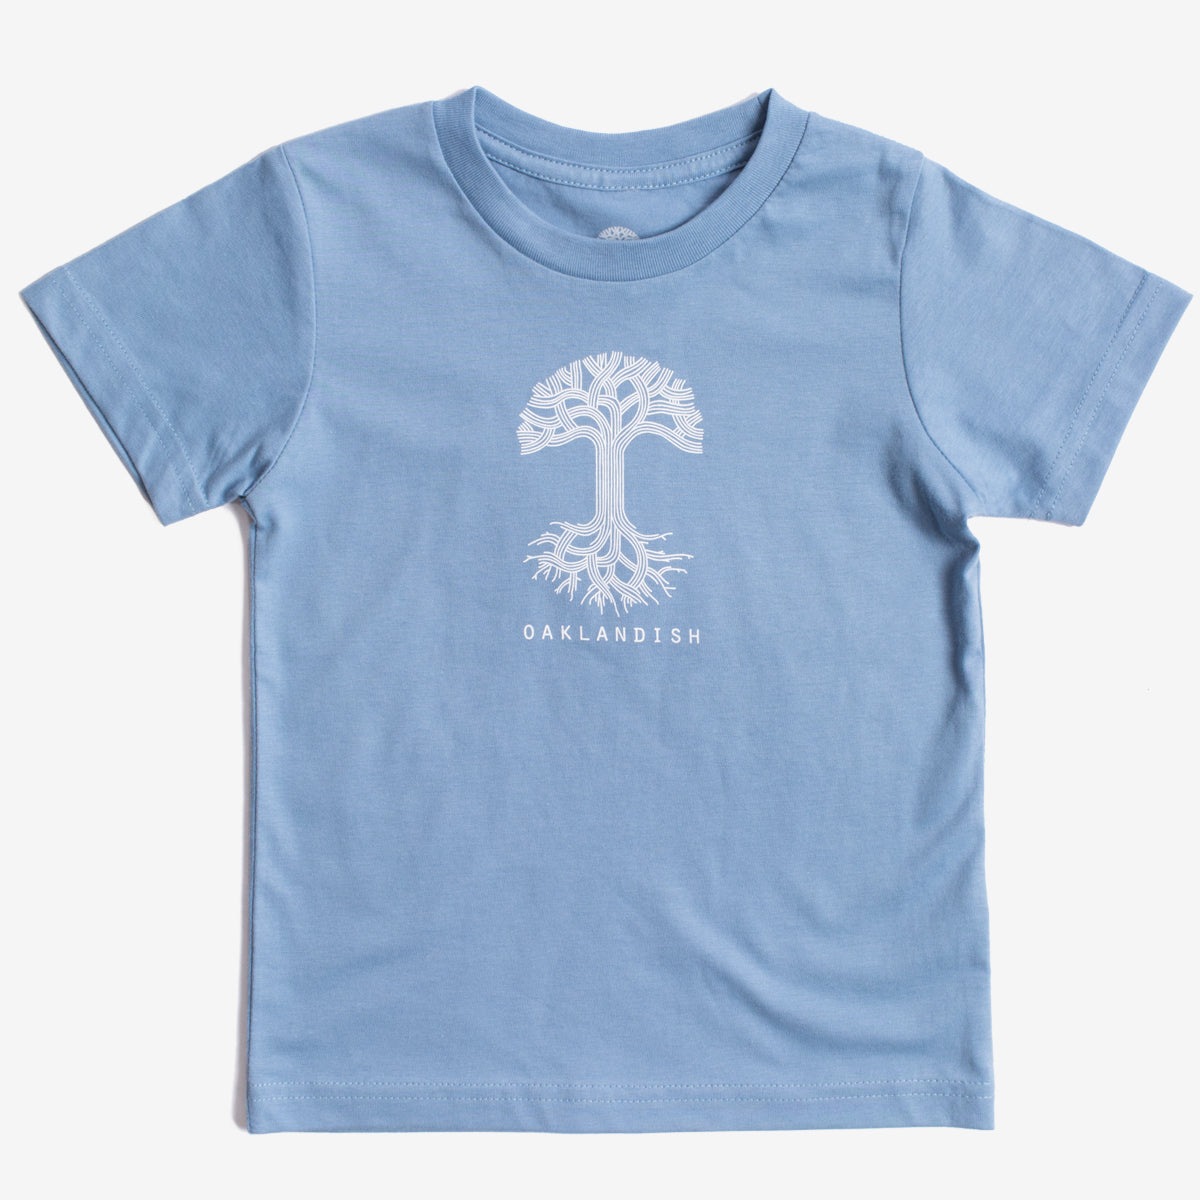 Carolina blue toddler-sized t-shirt with white Oaklandish tree logo and wordmark on the chest.